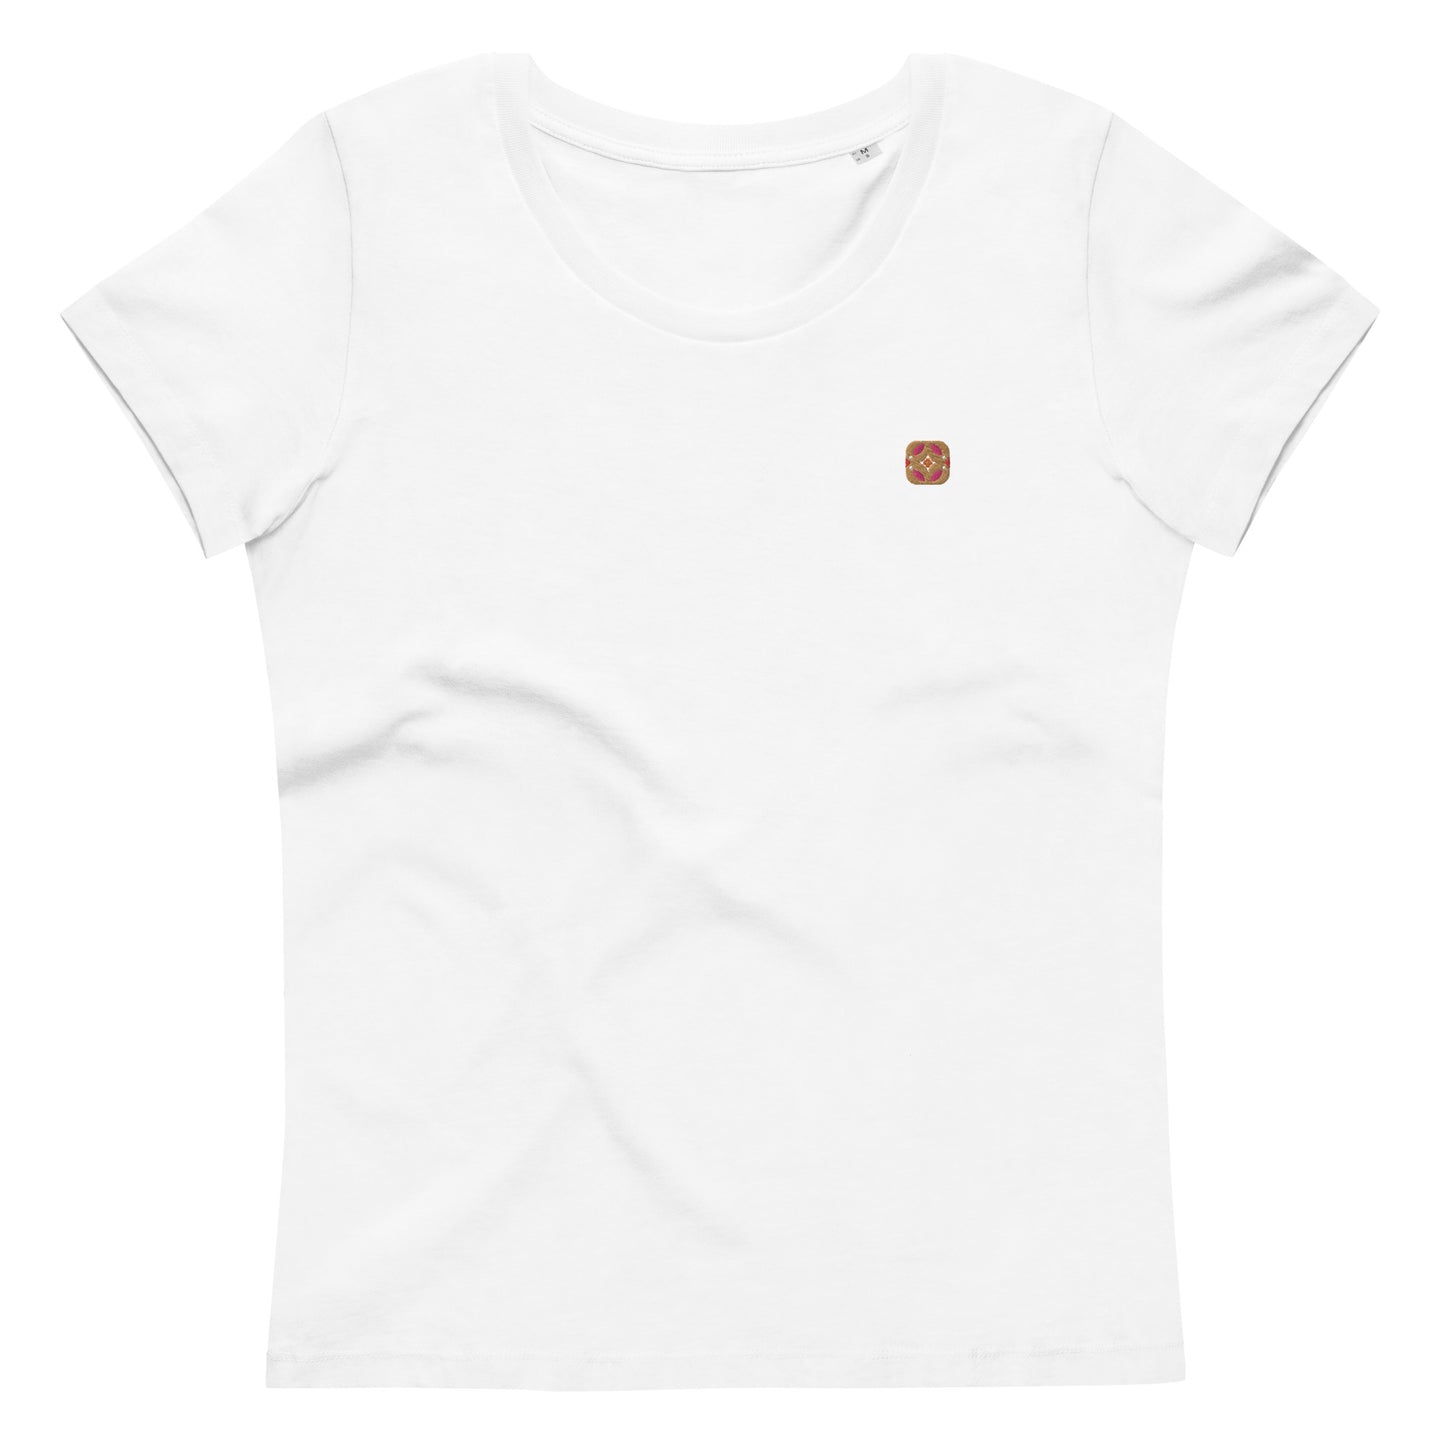 T-shirt bianca ricamata con uccelli primaverili in stile Bauhaus in cotone biologico - Donna bianco